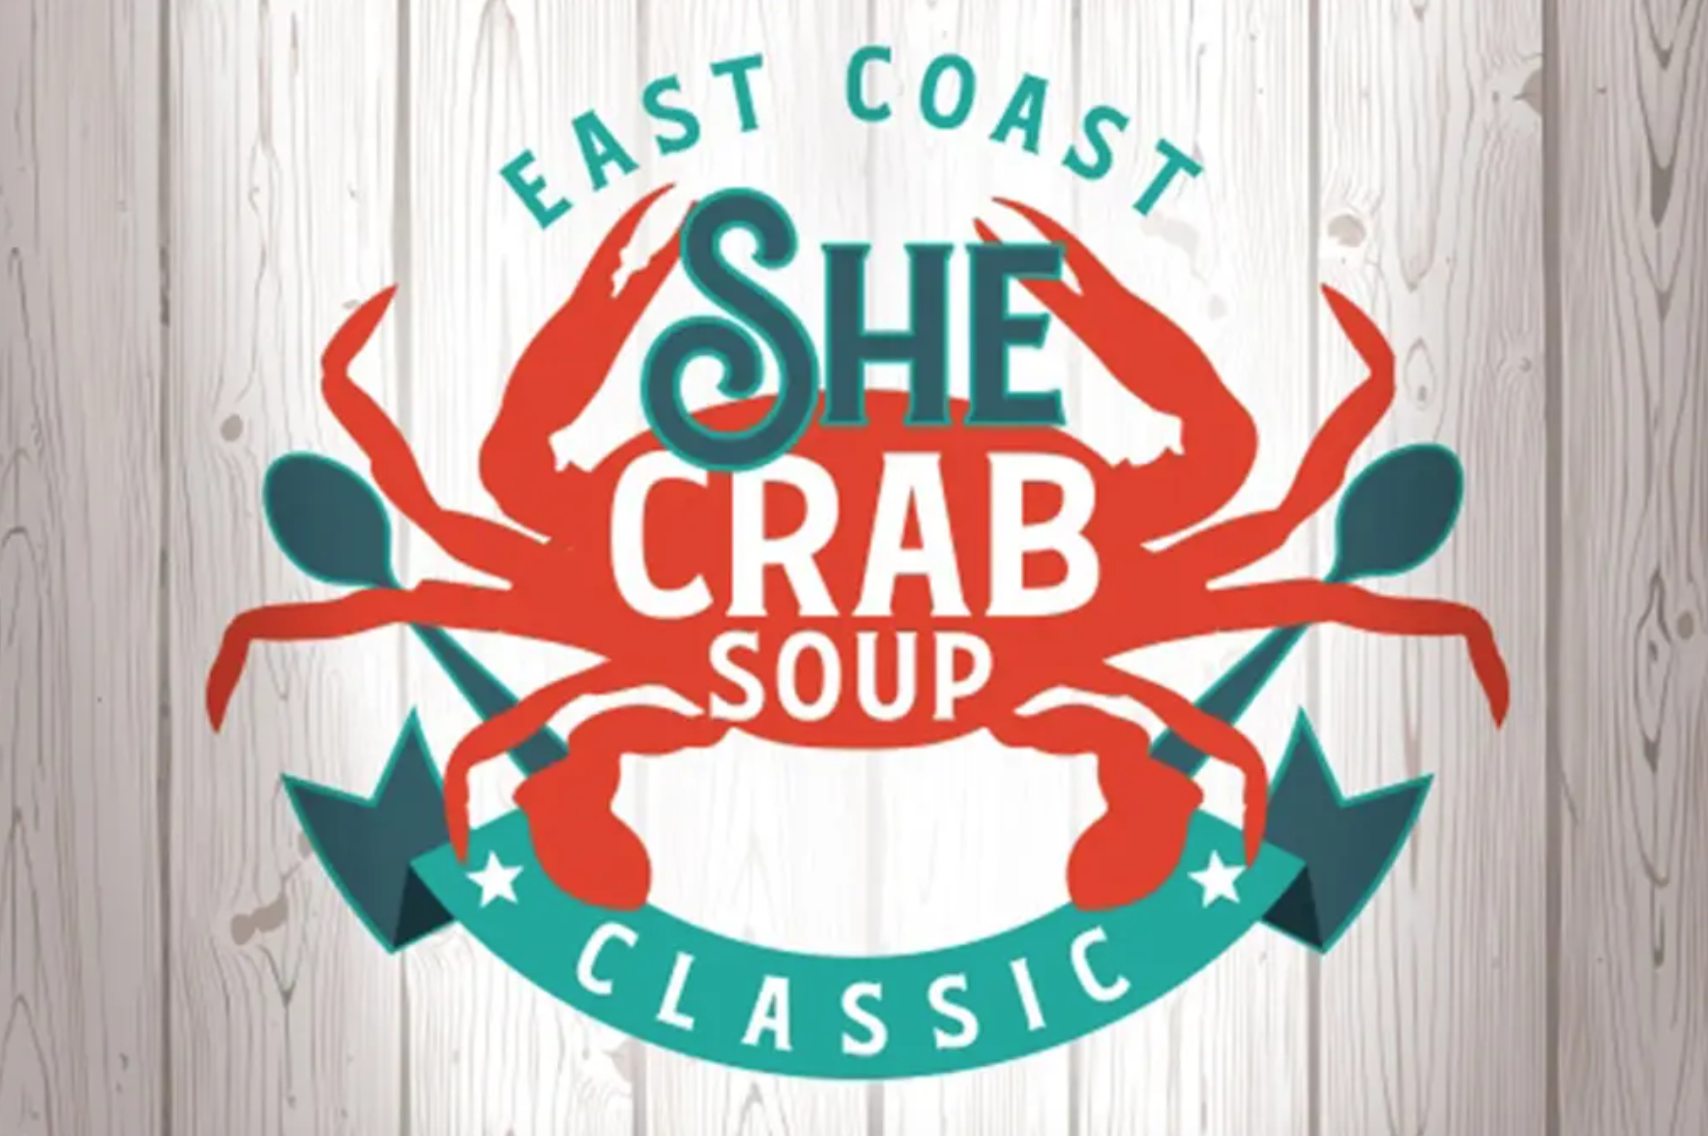 east coast she crab soup classic